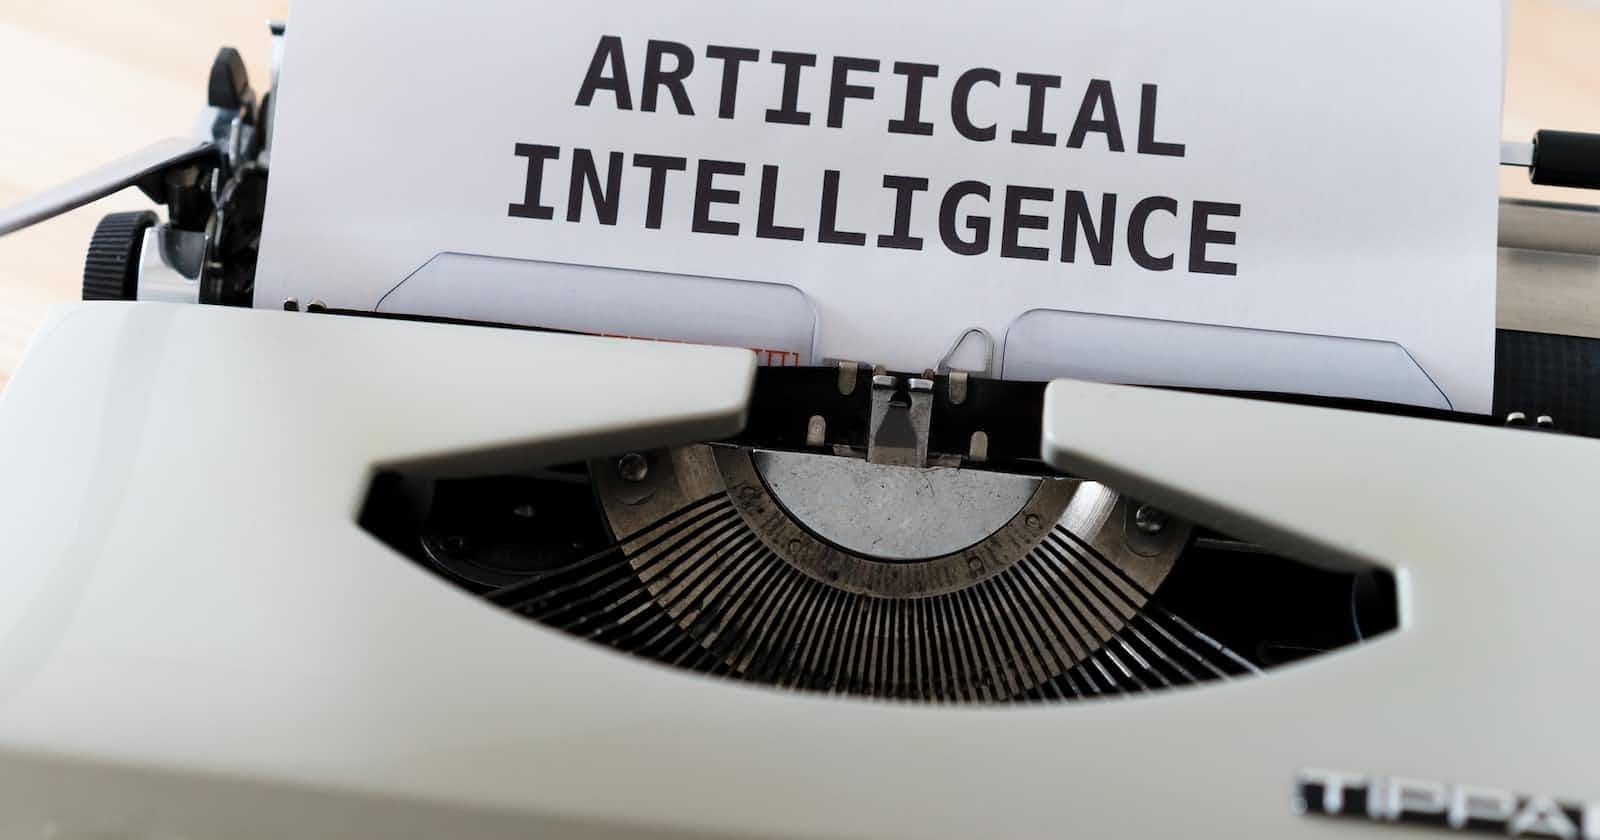 Understanding the Basics of Artificial Intelligence